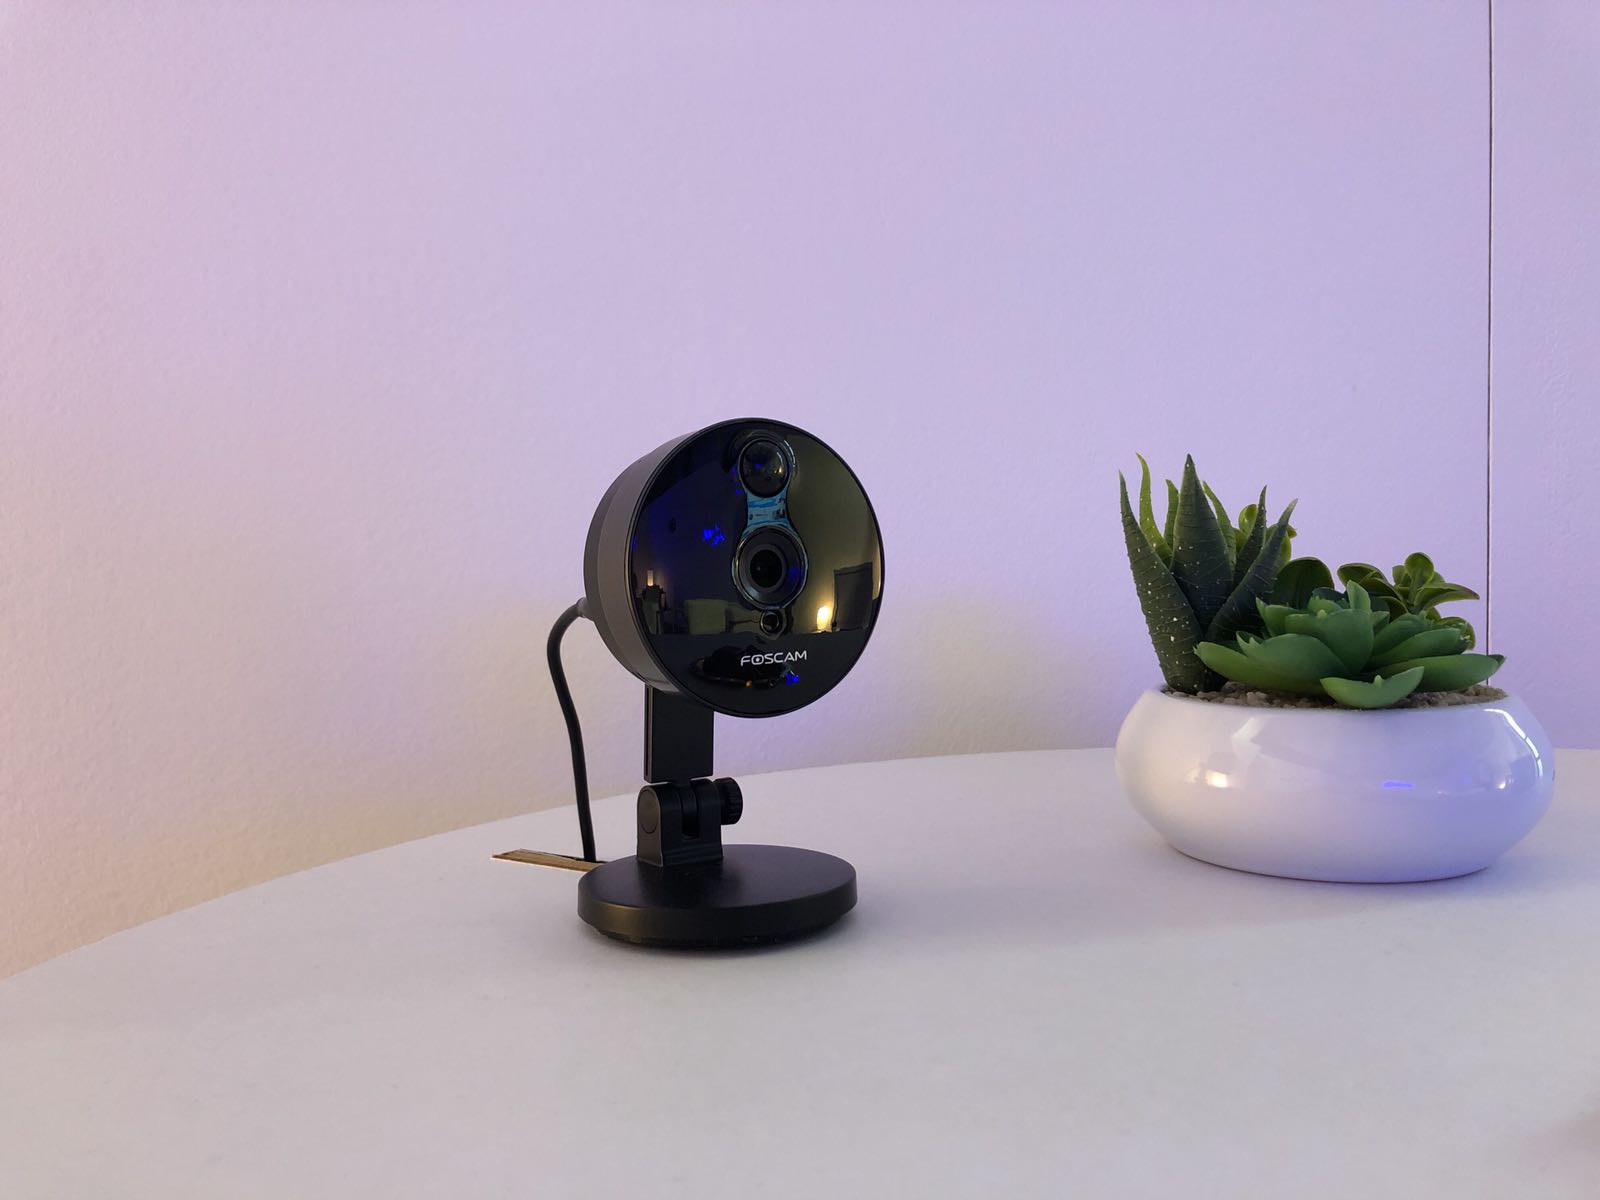 Intelligenza Artificiale Jarvis IOOOTA sfida Google Home , Amazon Alexa e HomePod